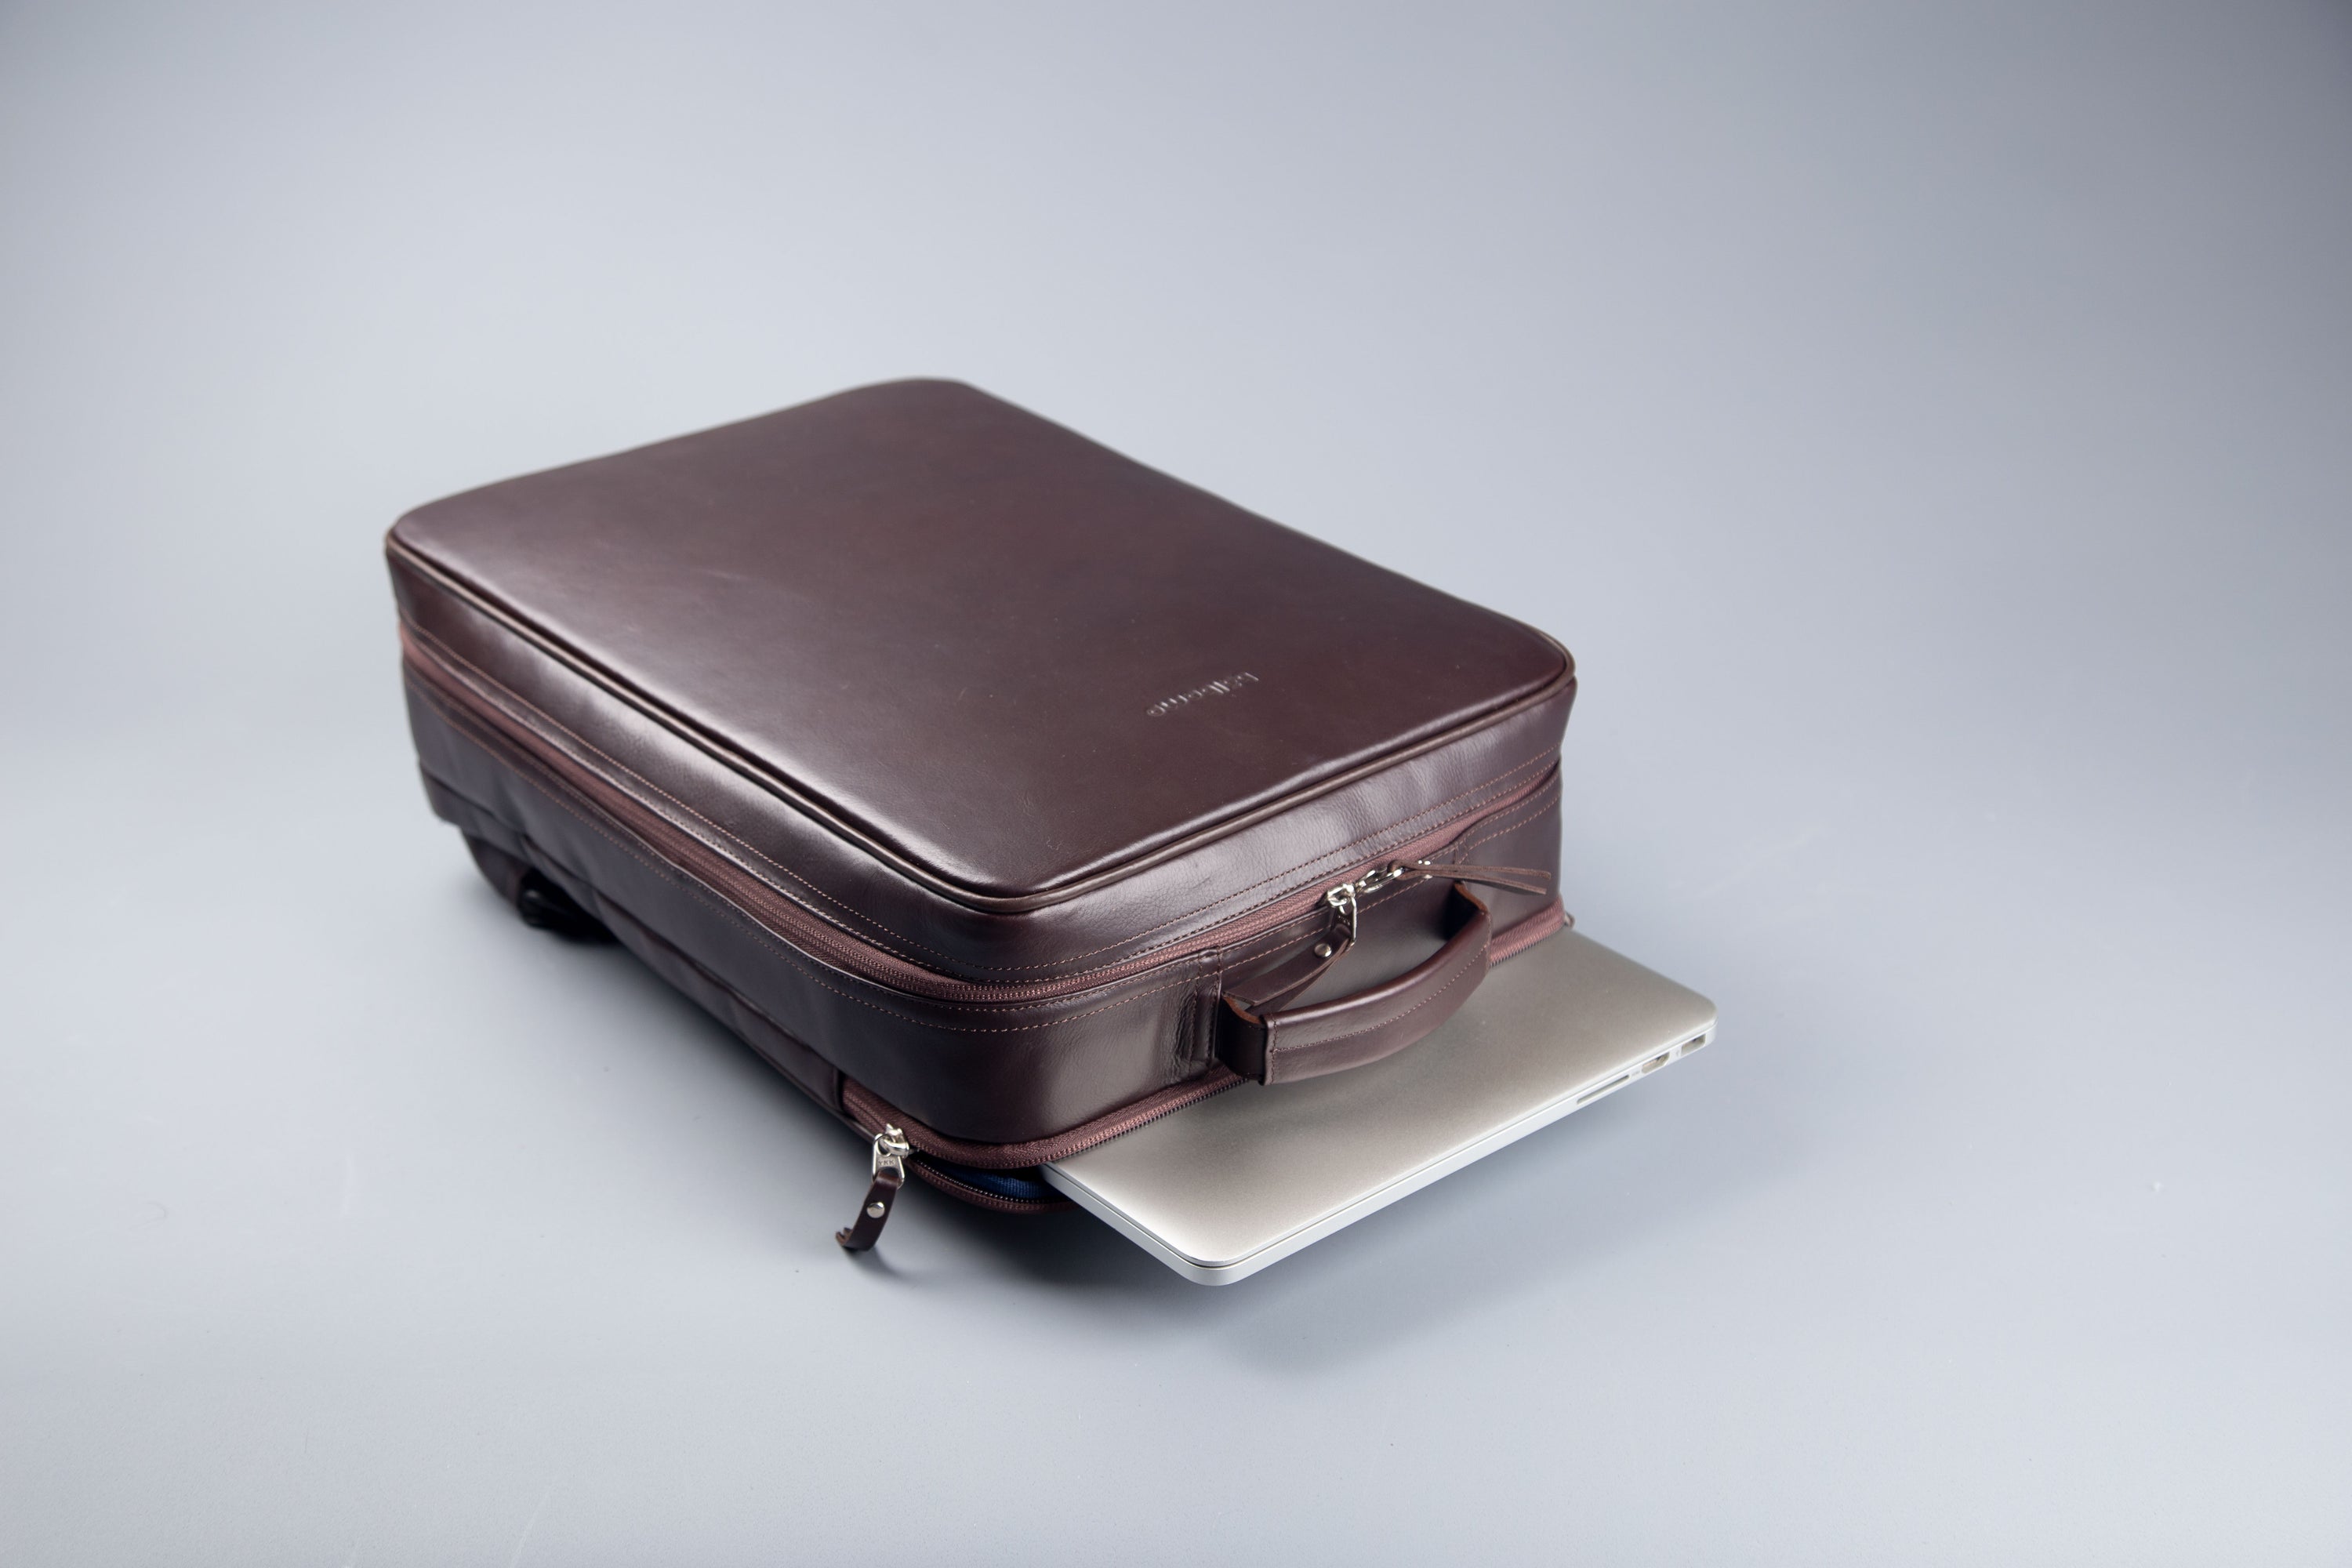 Morral "Backpack Briefcase" en cuero Manchester